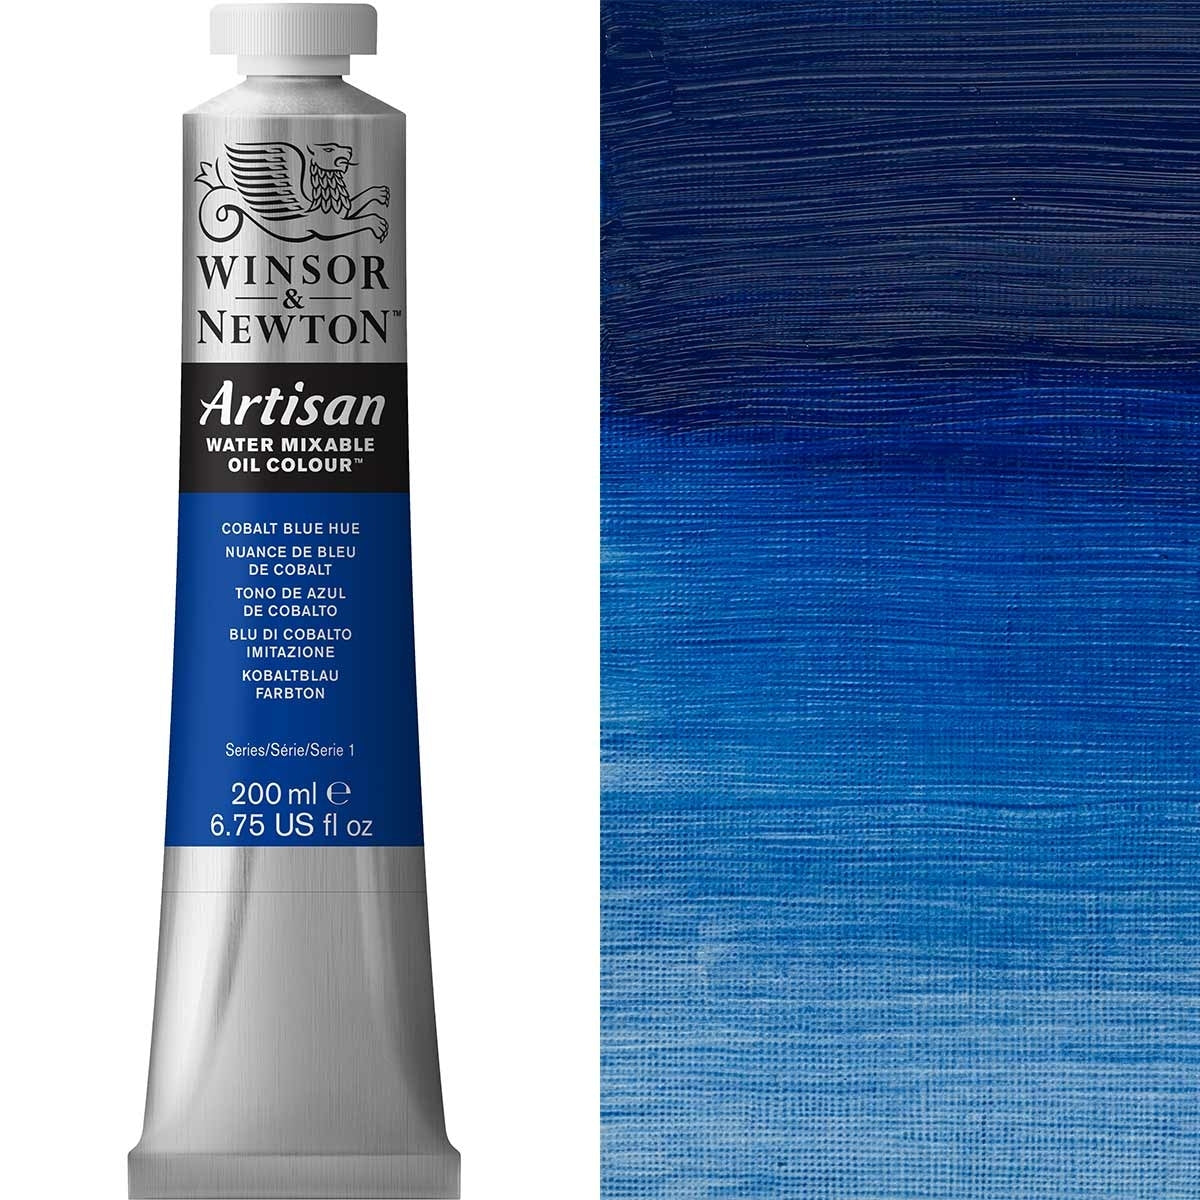 Winsor and Newton - Artisan Oil Colour Watermixable - 200ml - Cobalt Blue Hue